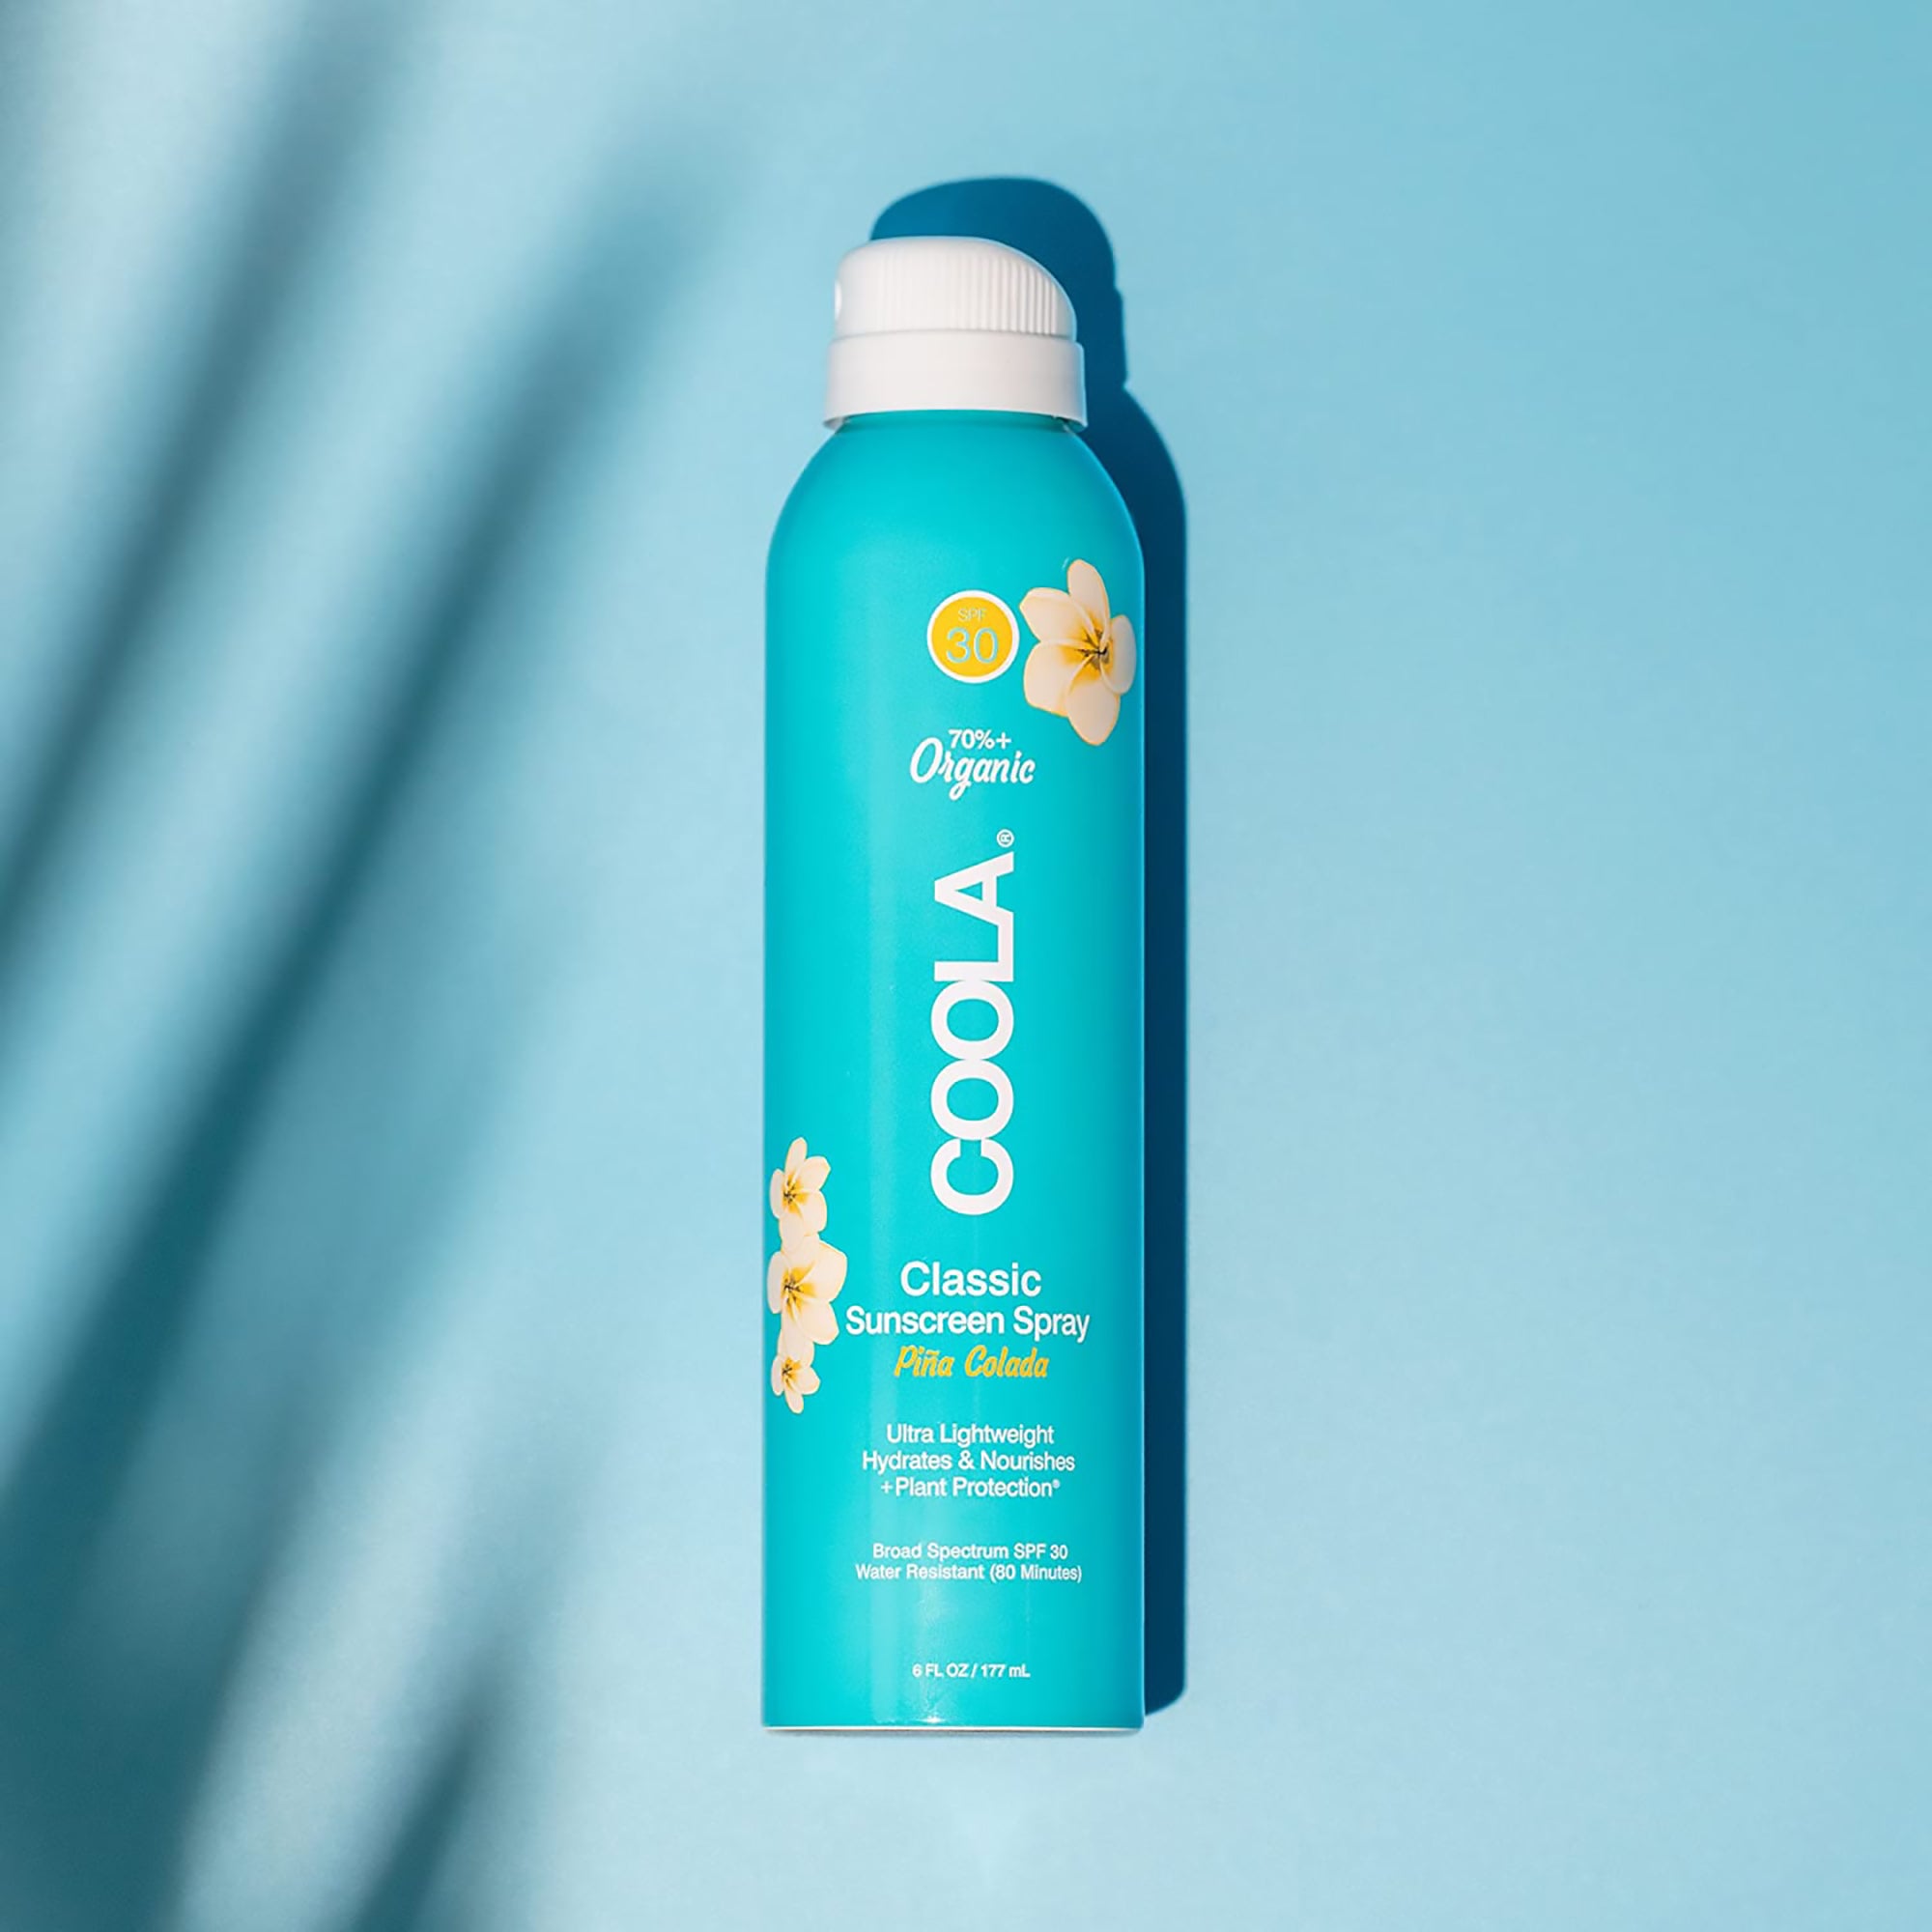 COOLA Suncare - Classic Body Organic Sunscreen Spray SPF 30 Tropical Coconut / PINA COLADA